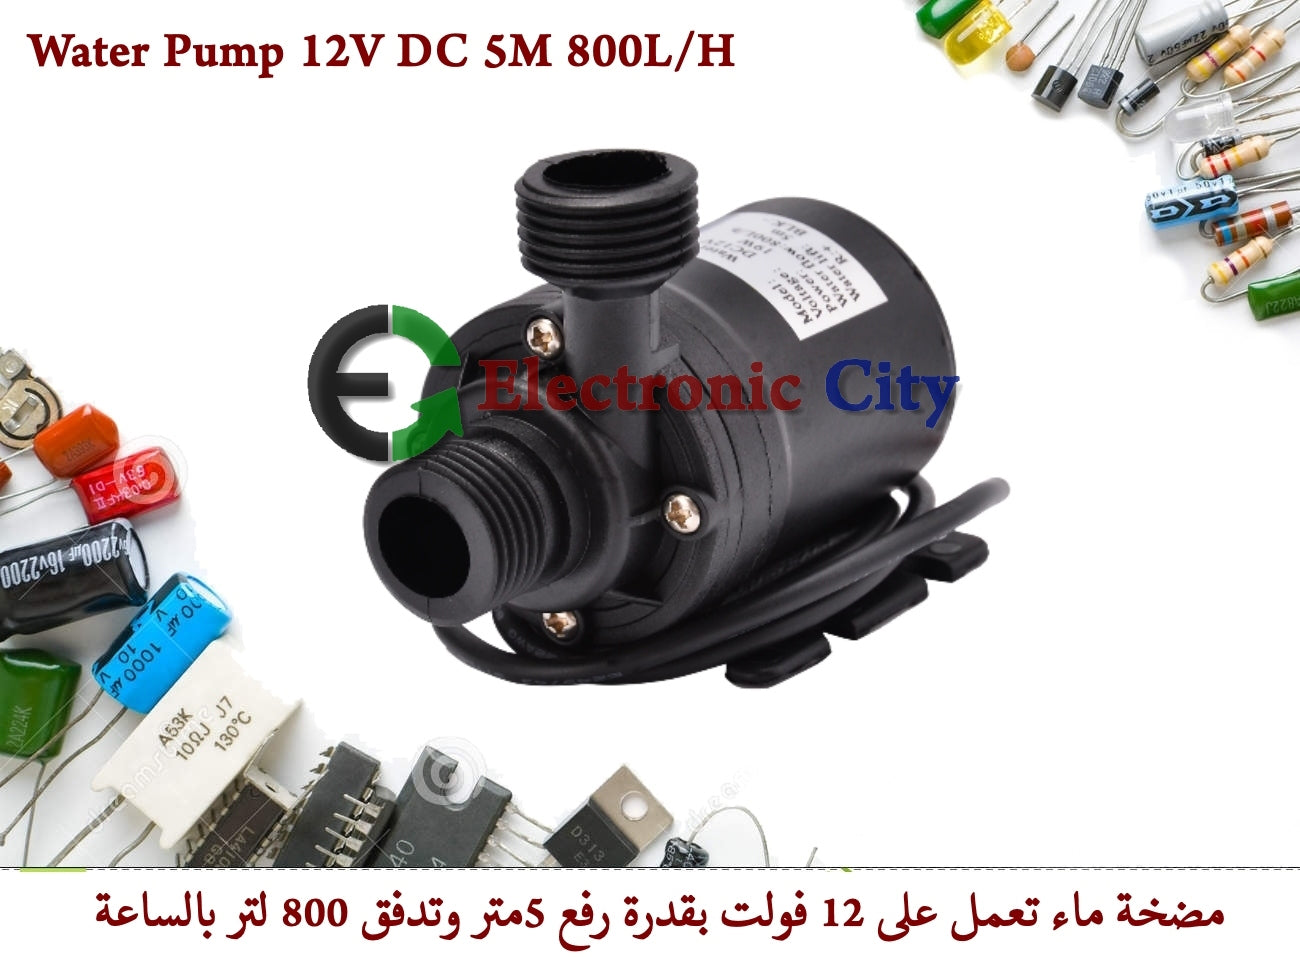 Water Pump 12V DC 5M 800L/H